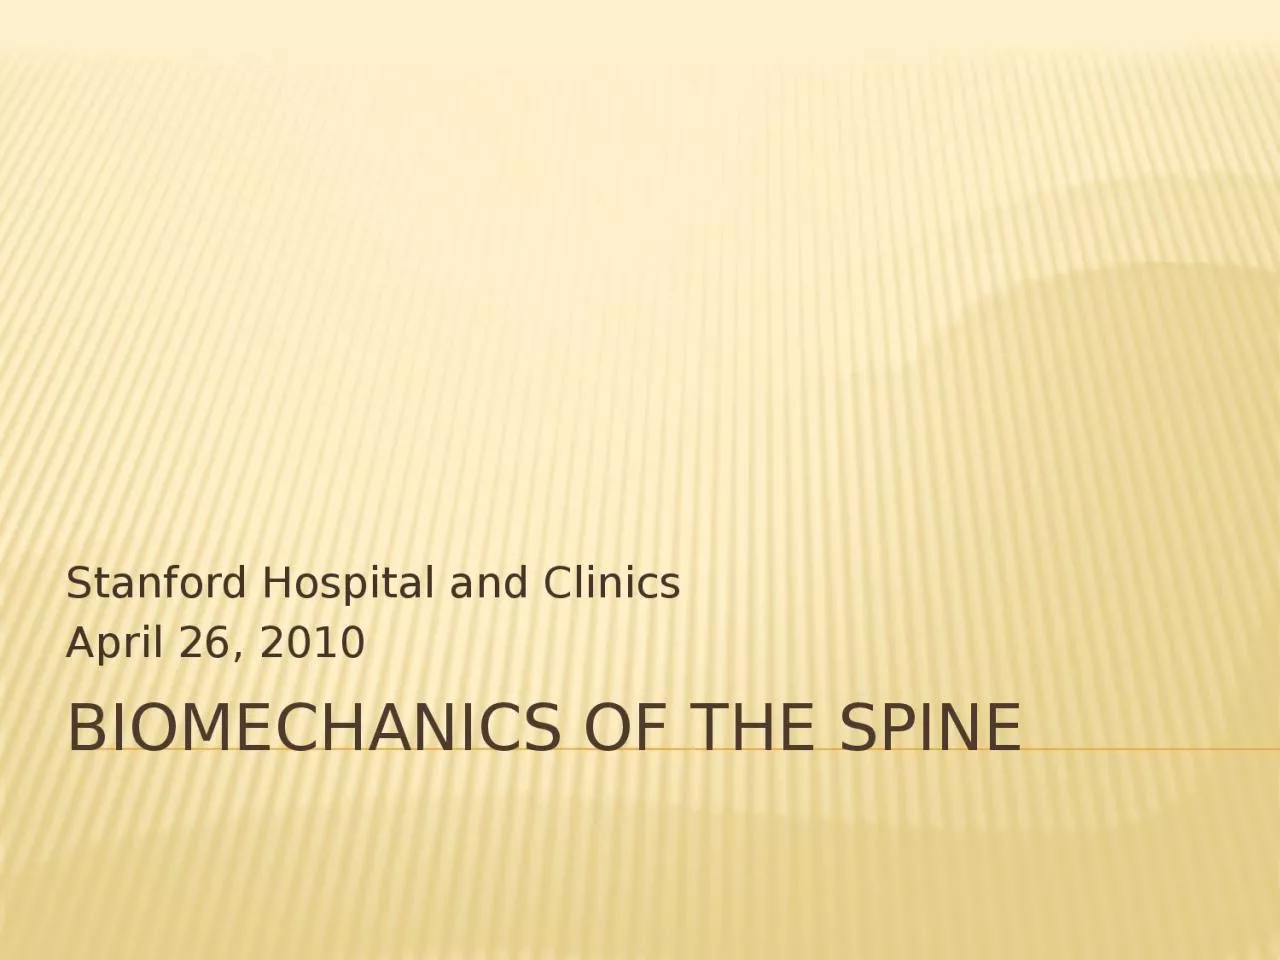 biomechanics of the spine